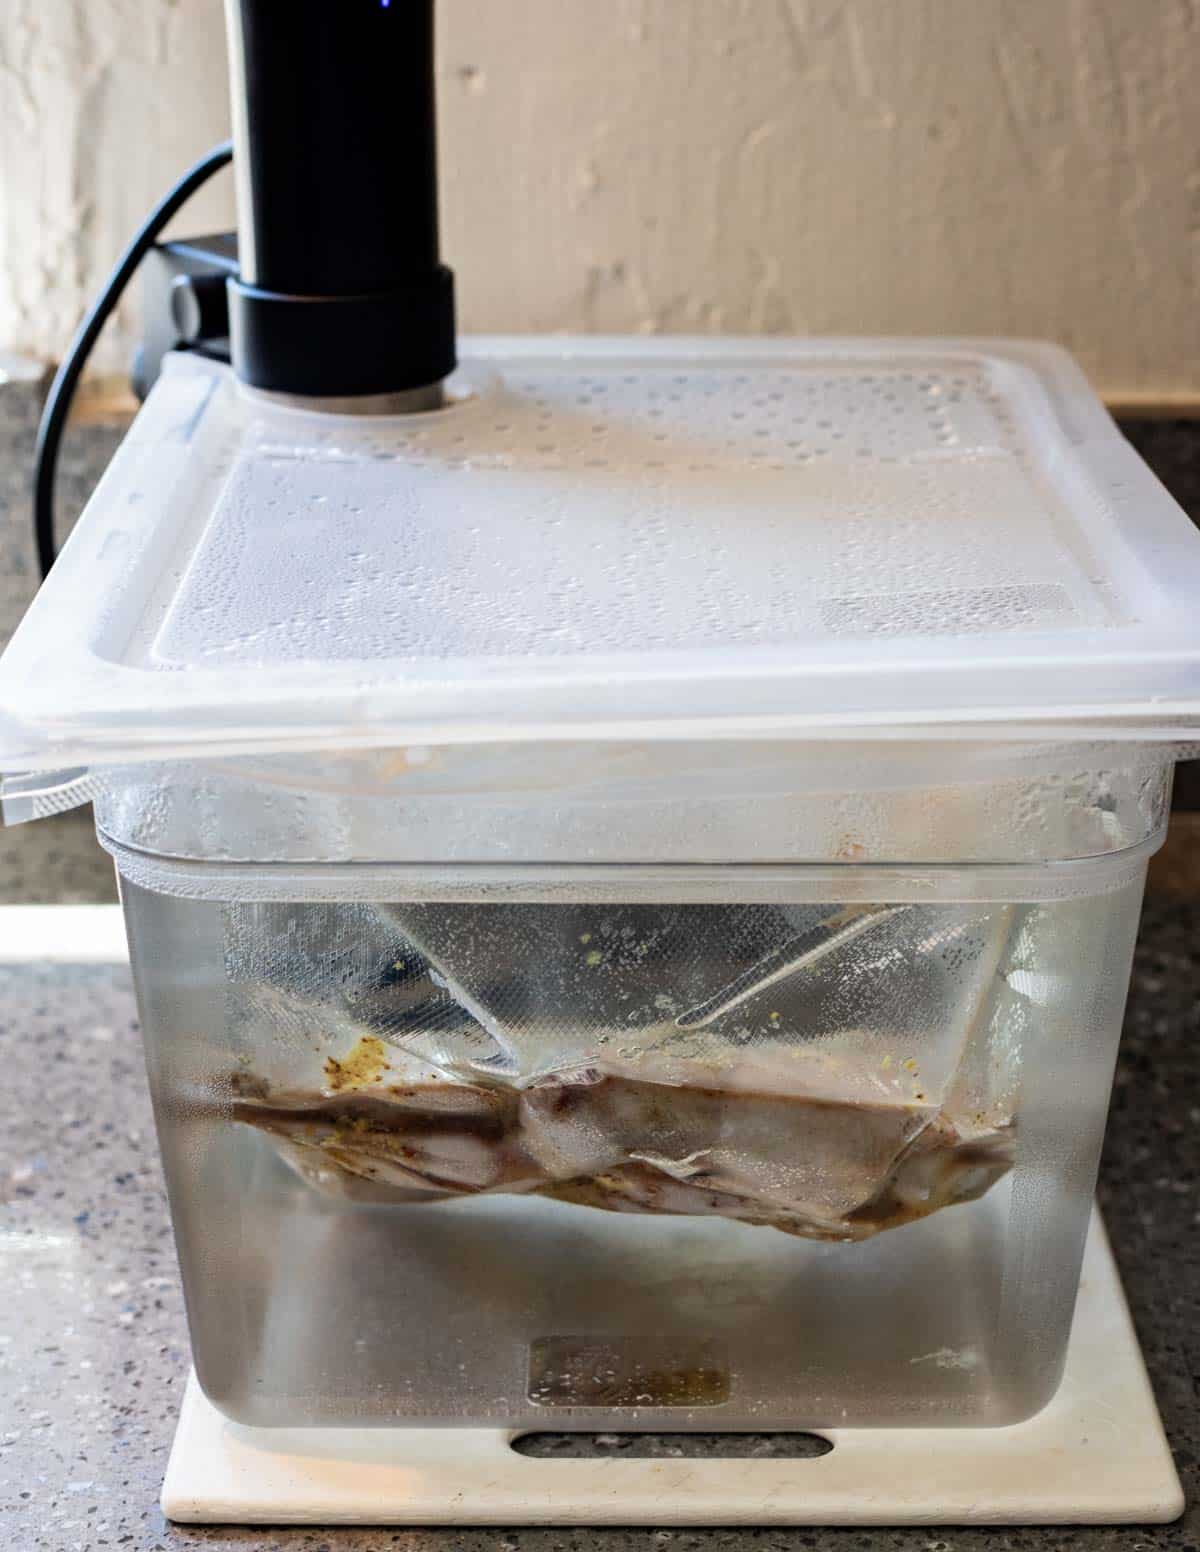 Vacuum sealed quail in a sous vide water bath.